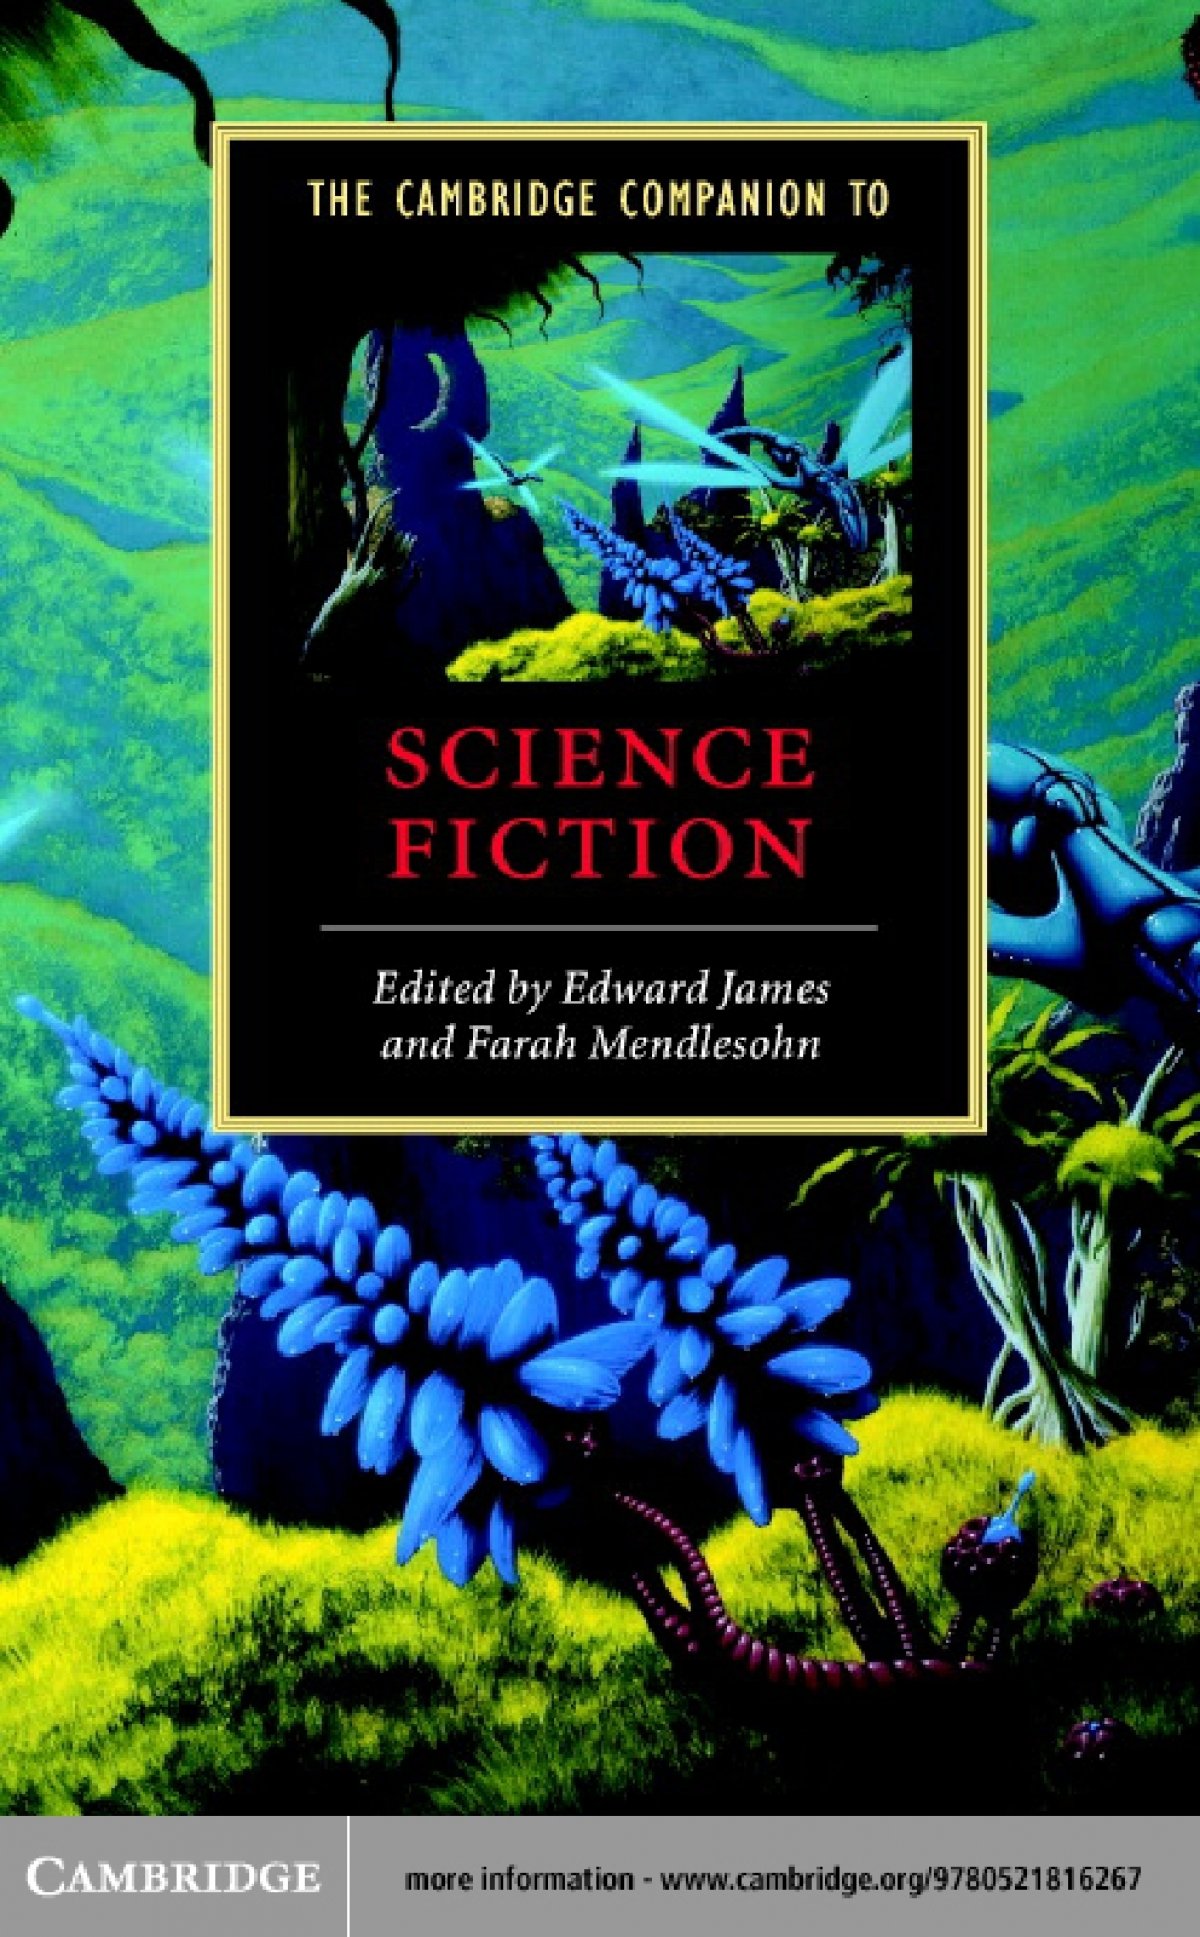 ALISTAIR REYNOLDS SCIENCE FICTION LOT 2003 2 BOOKS